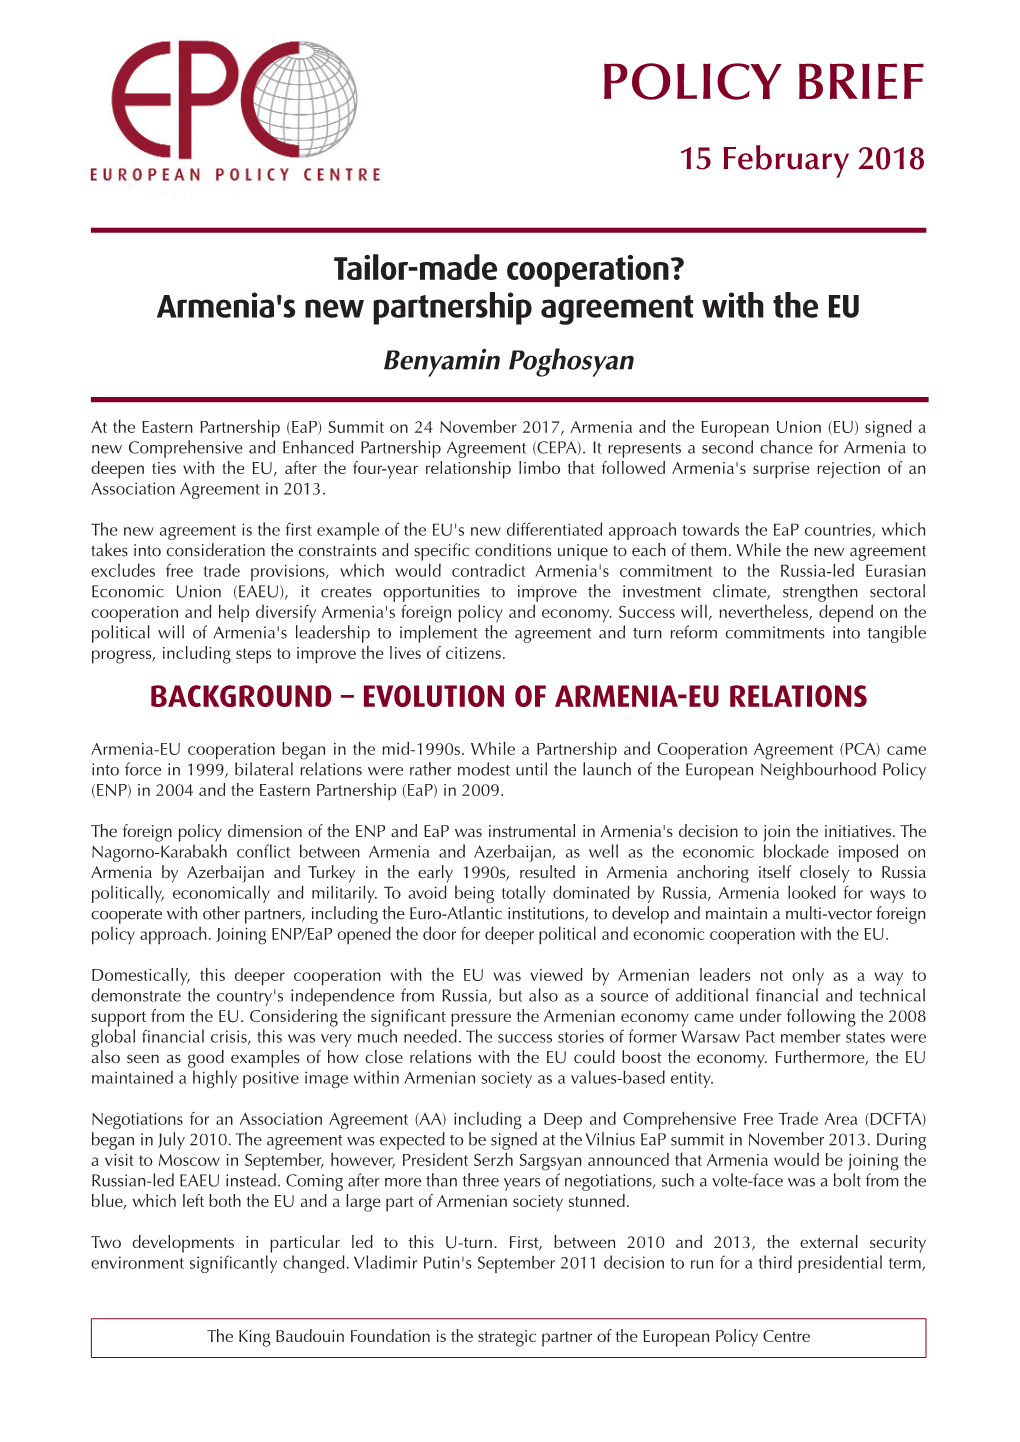 Tailor-Made Cooperation? Armenia's New Partnership Agreement with the EU Benyamin Poghosyan